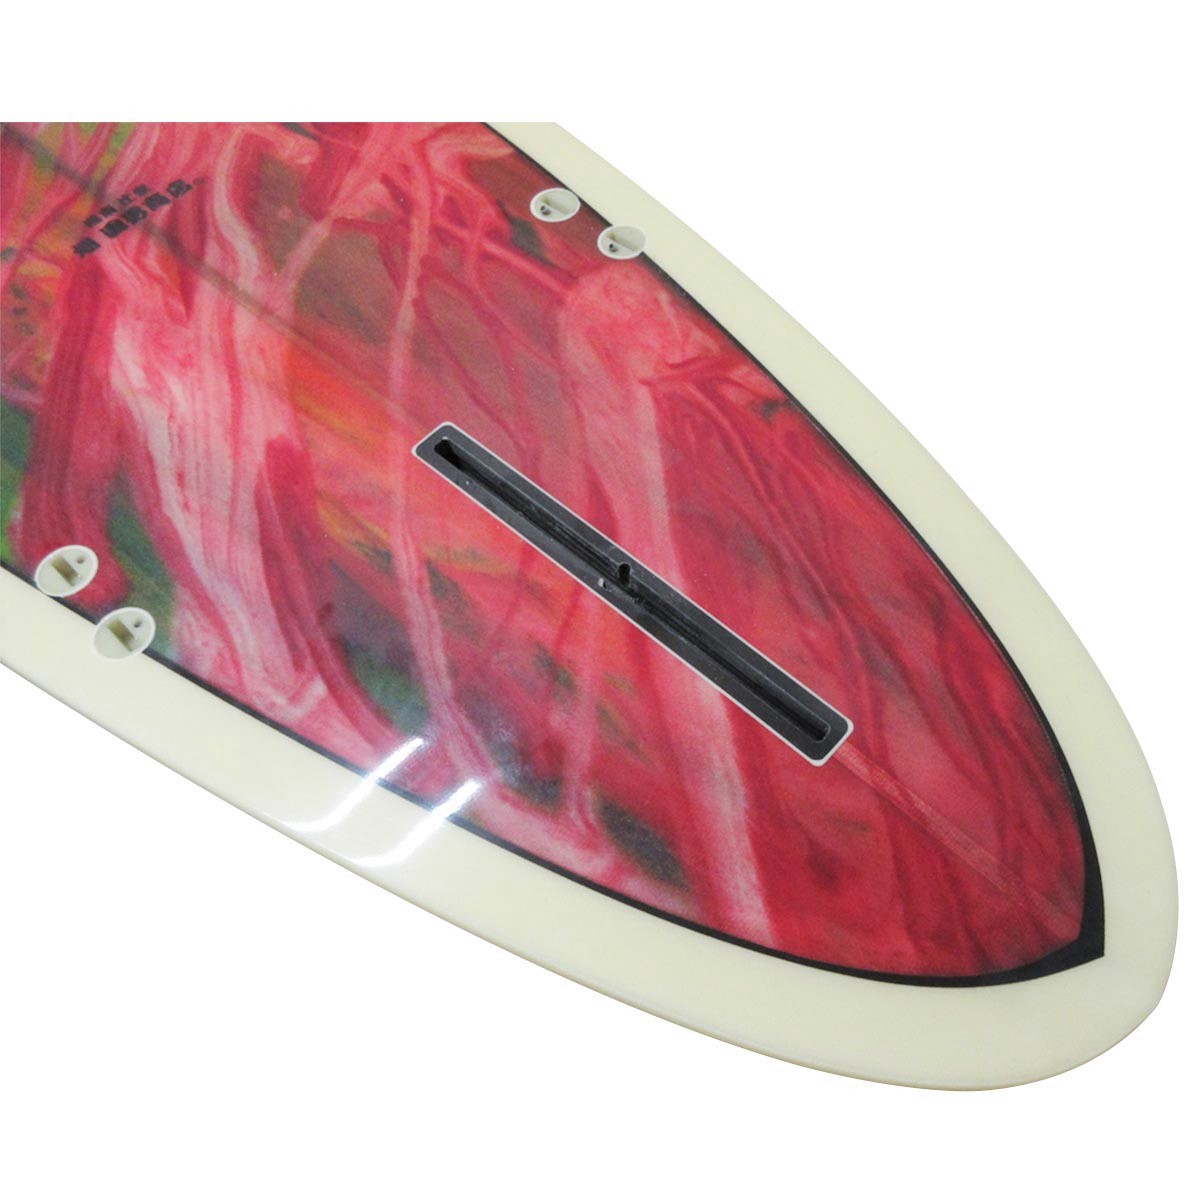 HATA SURFBOARDS / 9`1 Custom shaped by Kunio Hata